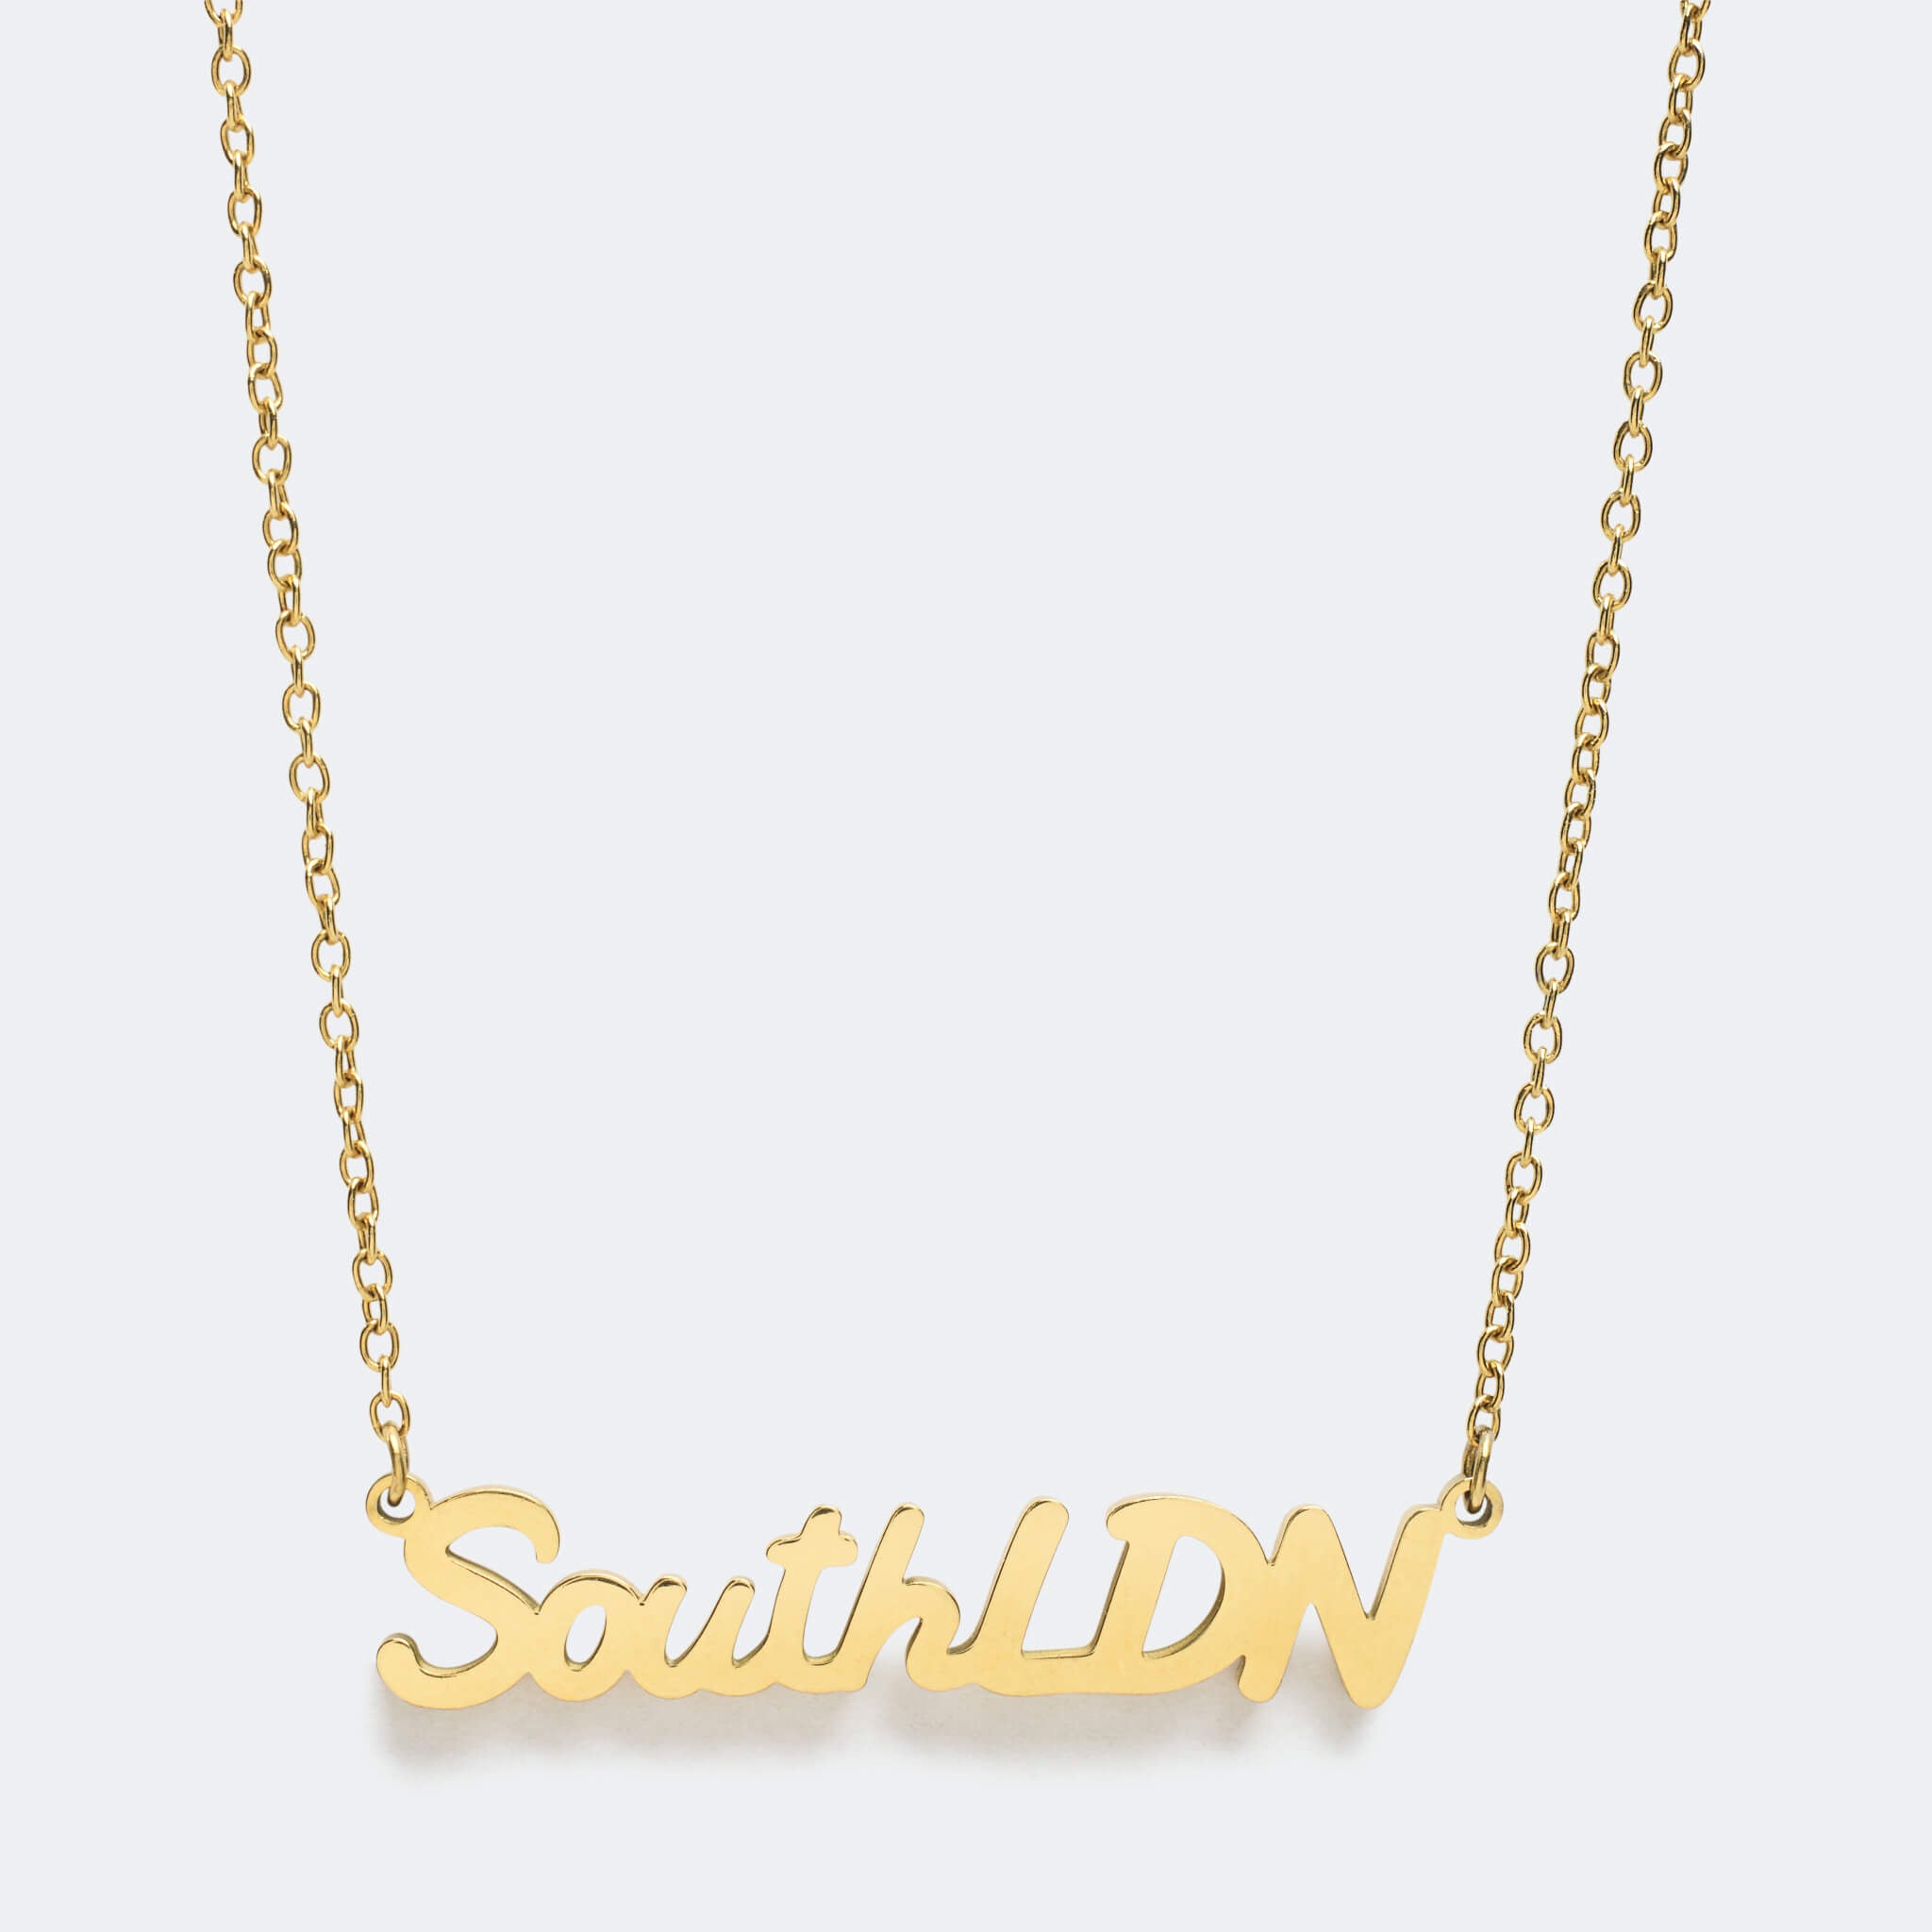 South LDN Chain